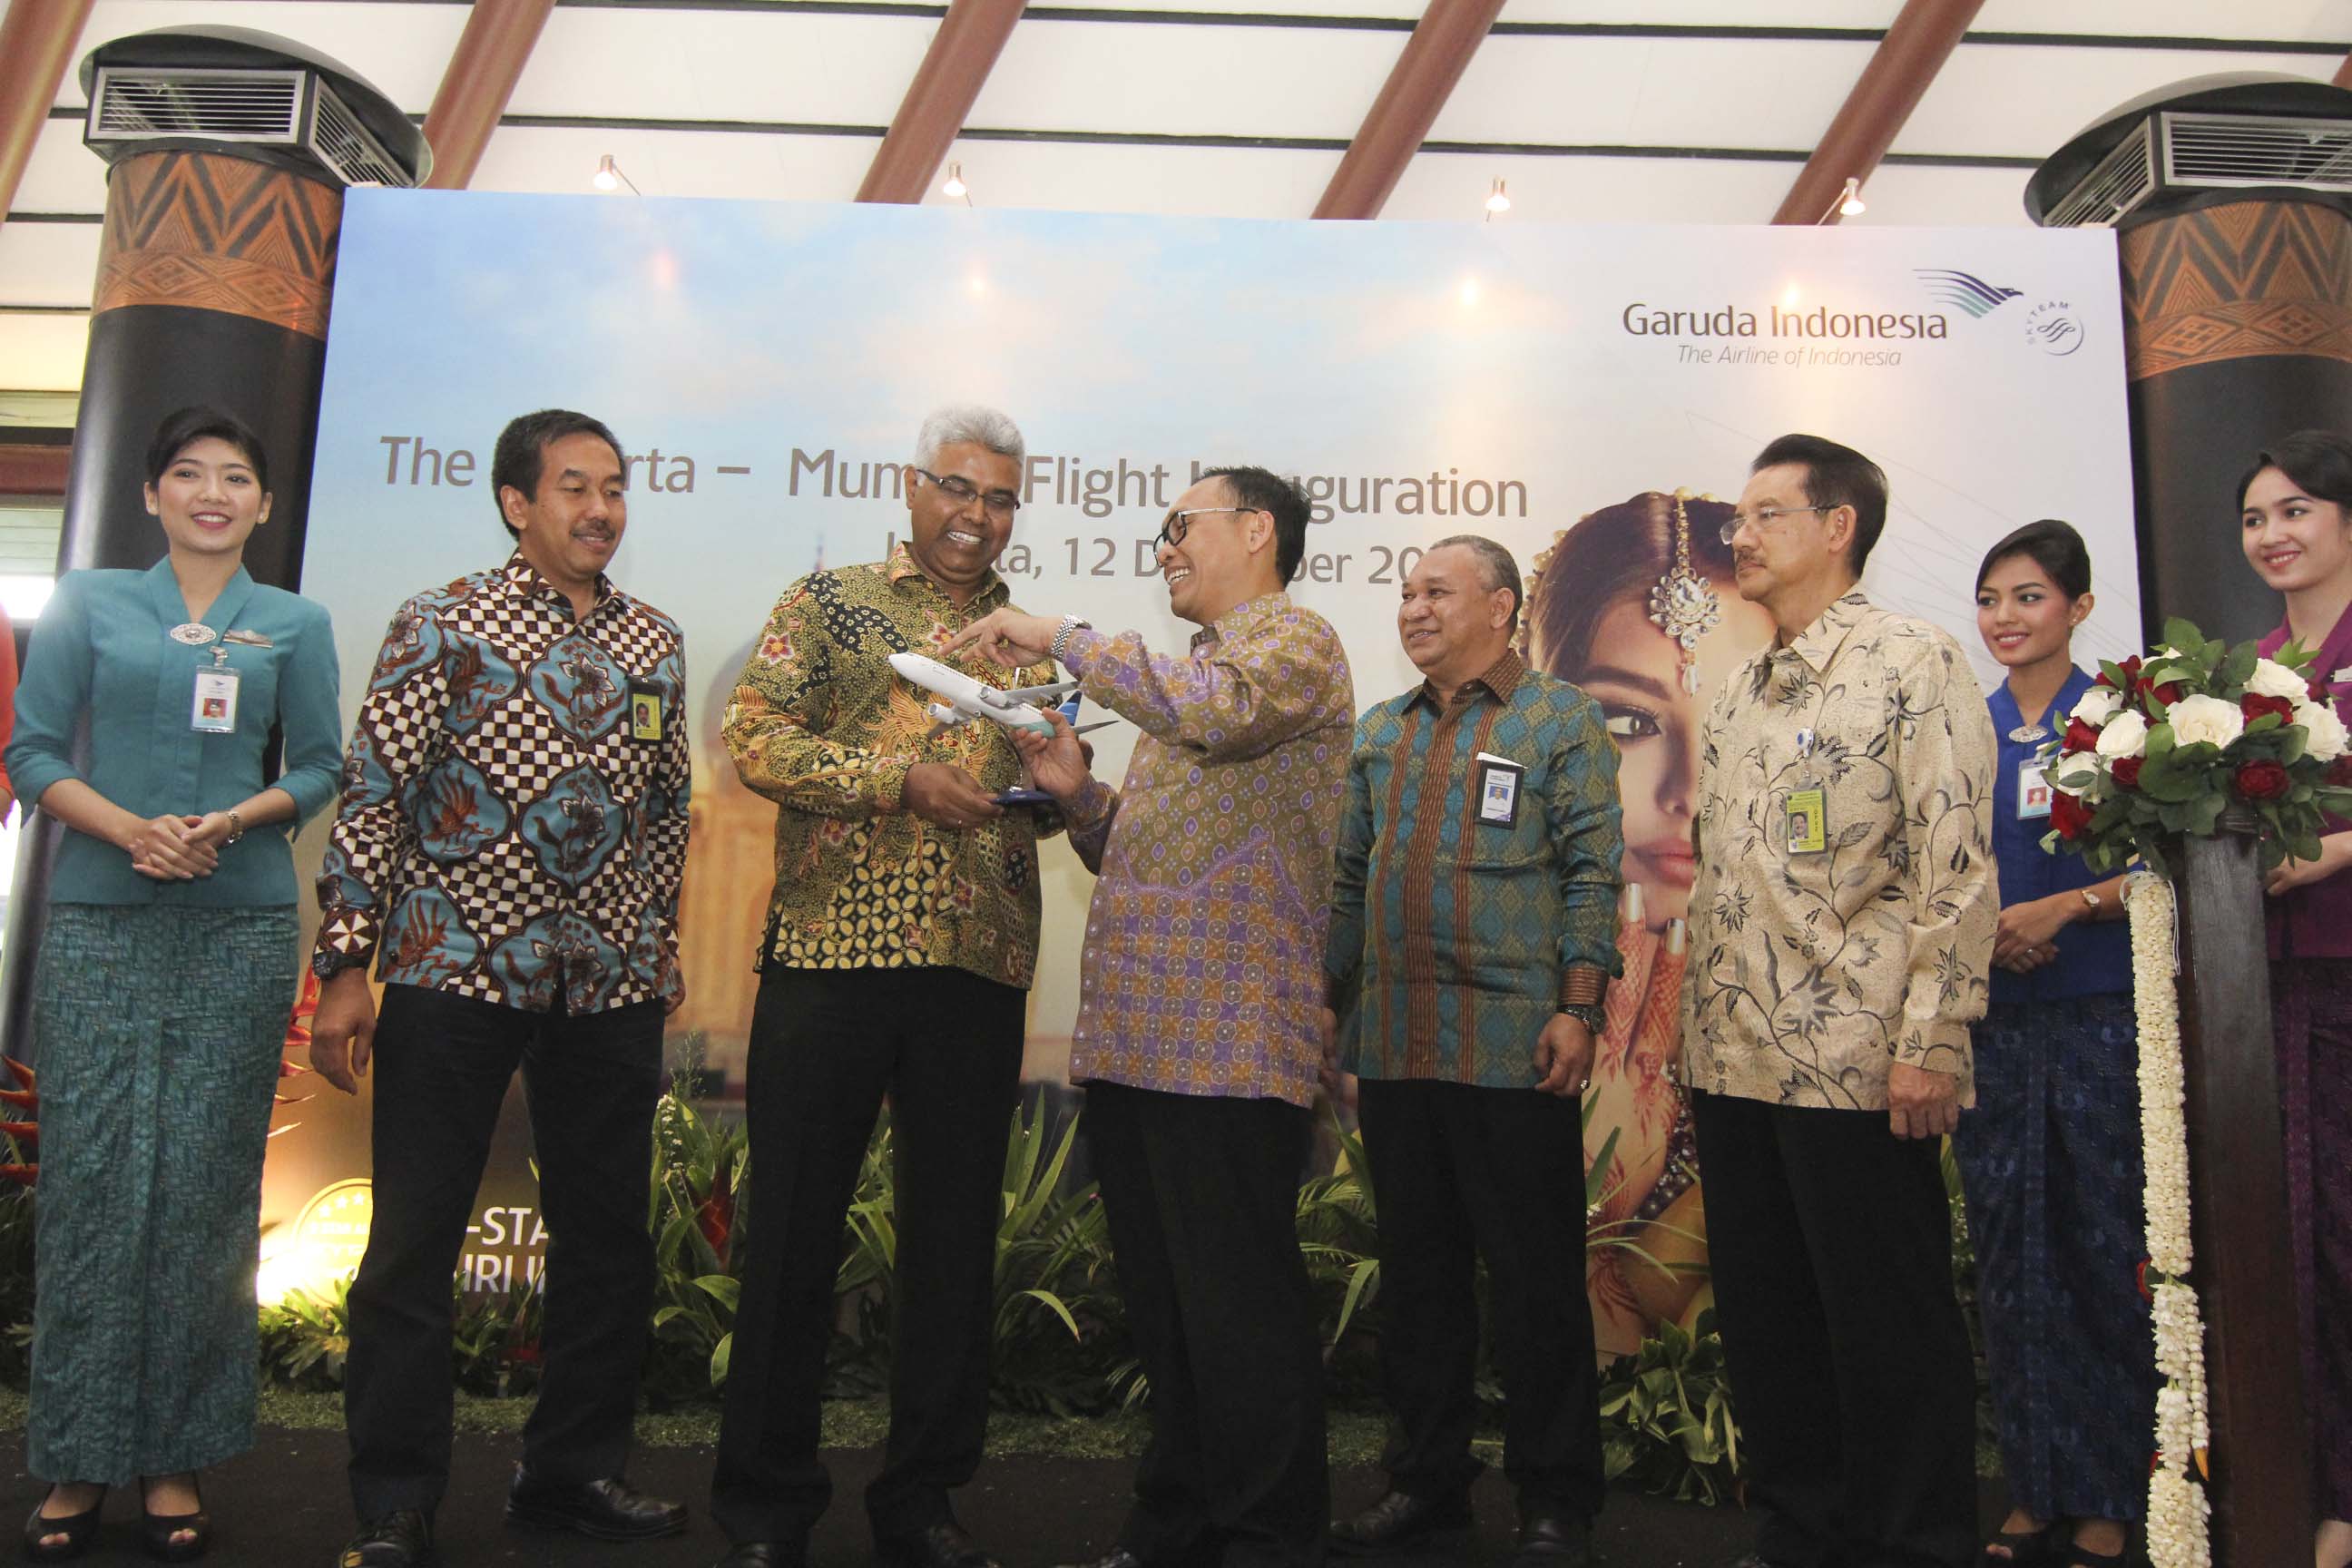 Garuda Indonesia Strengthens its Global Presence With a New Service to Mumbai